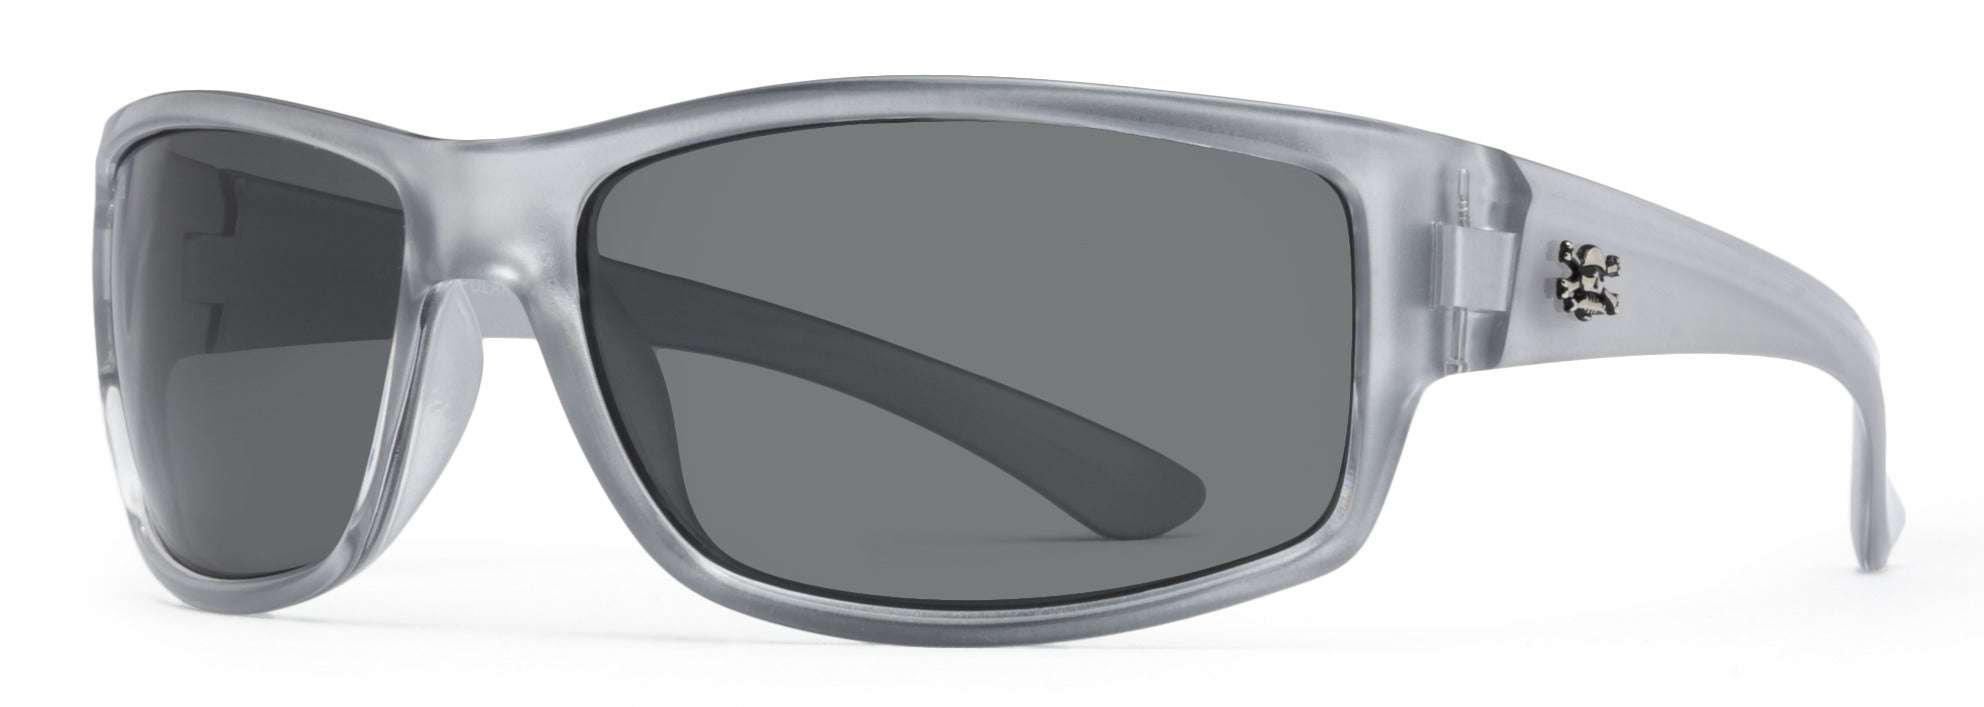 Calcutta R1CG Rip Sunglasses Crystal Frame Gray Lens 62mm Lens